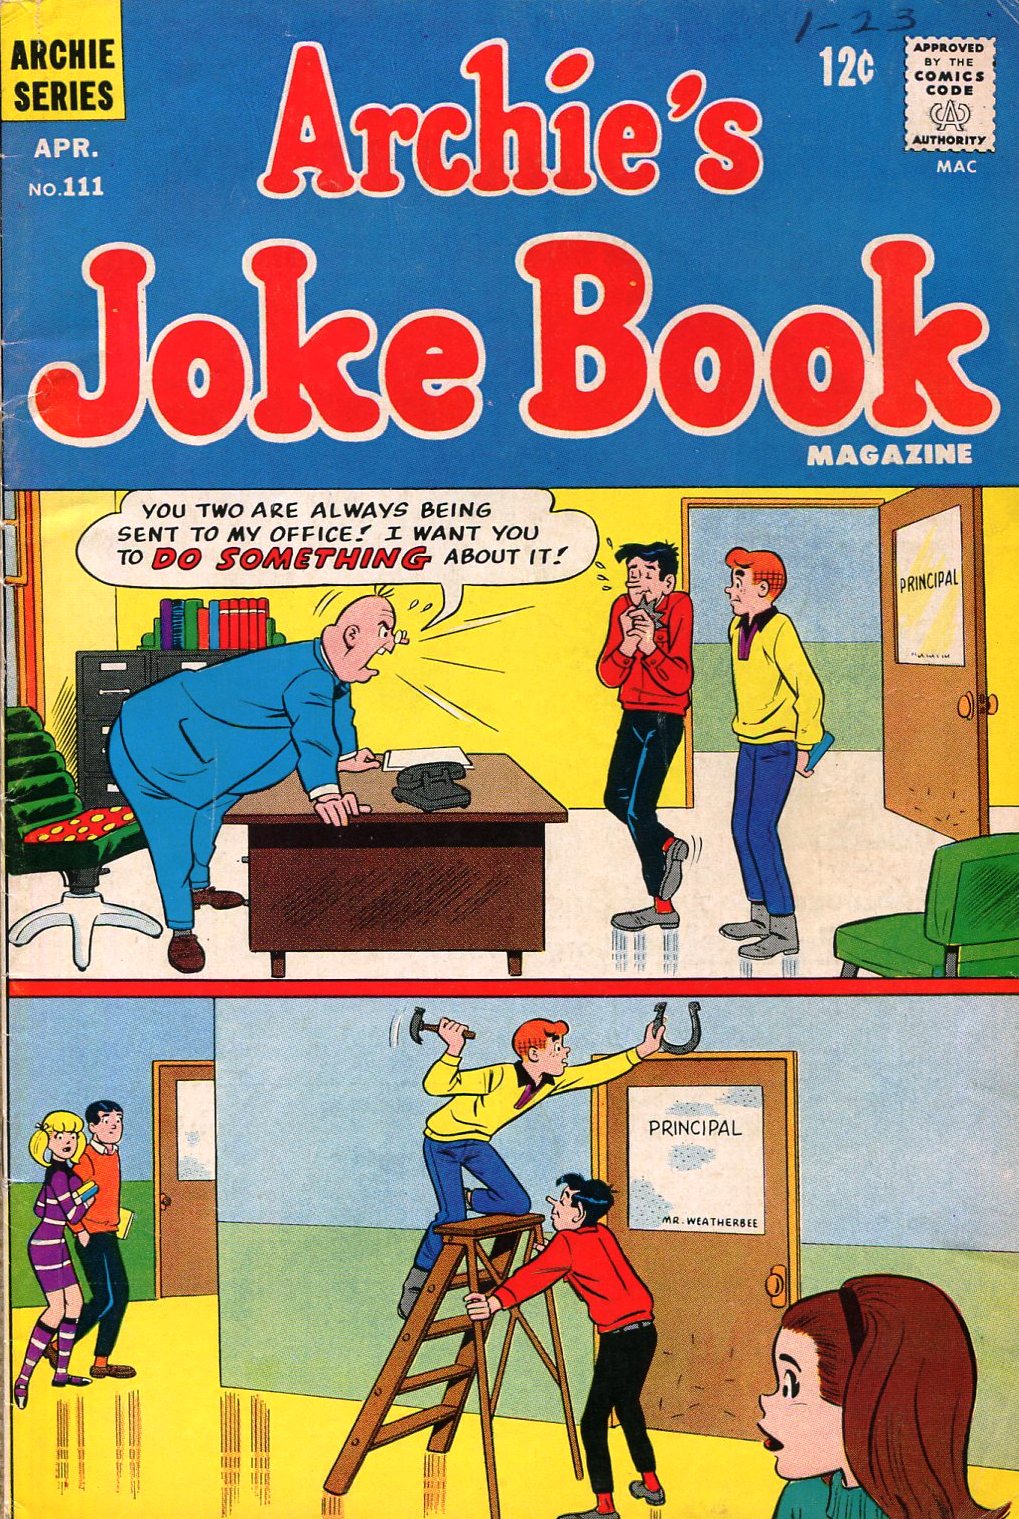 Archie's Joke Book Magazine issue 111 - Page 1